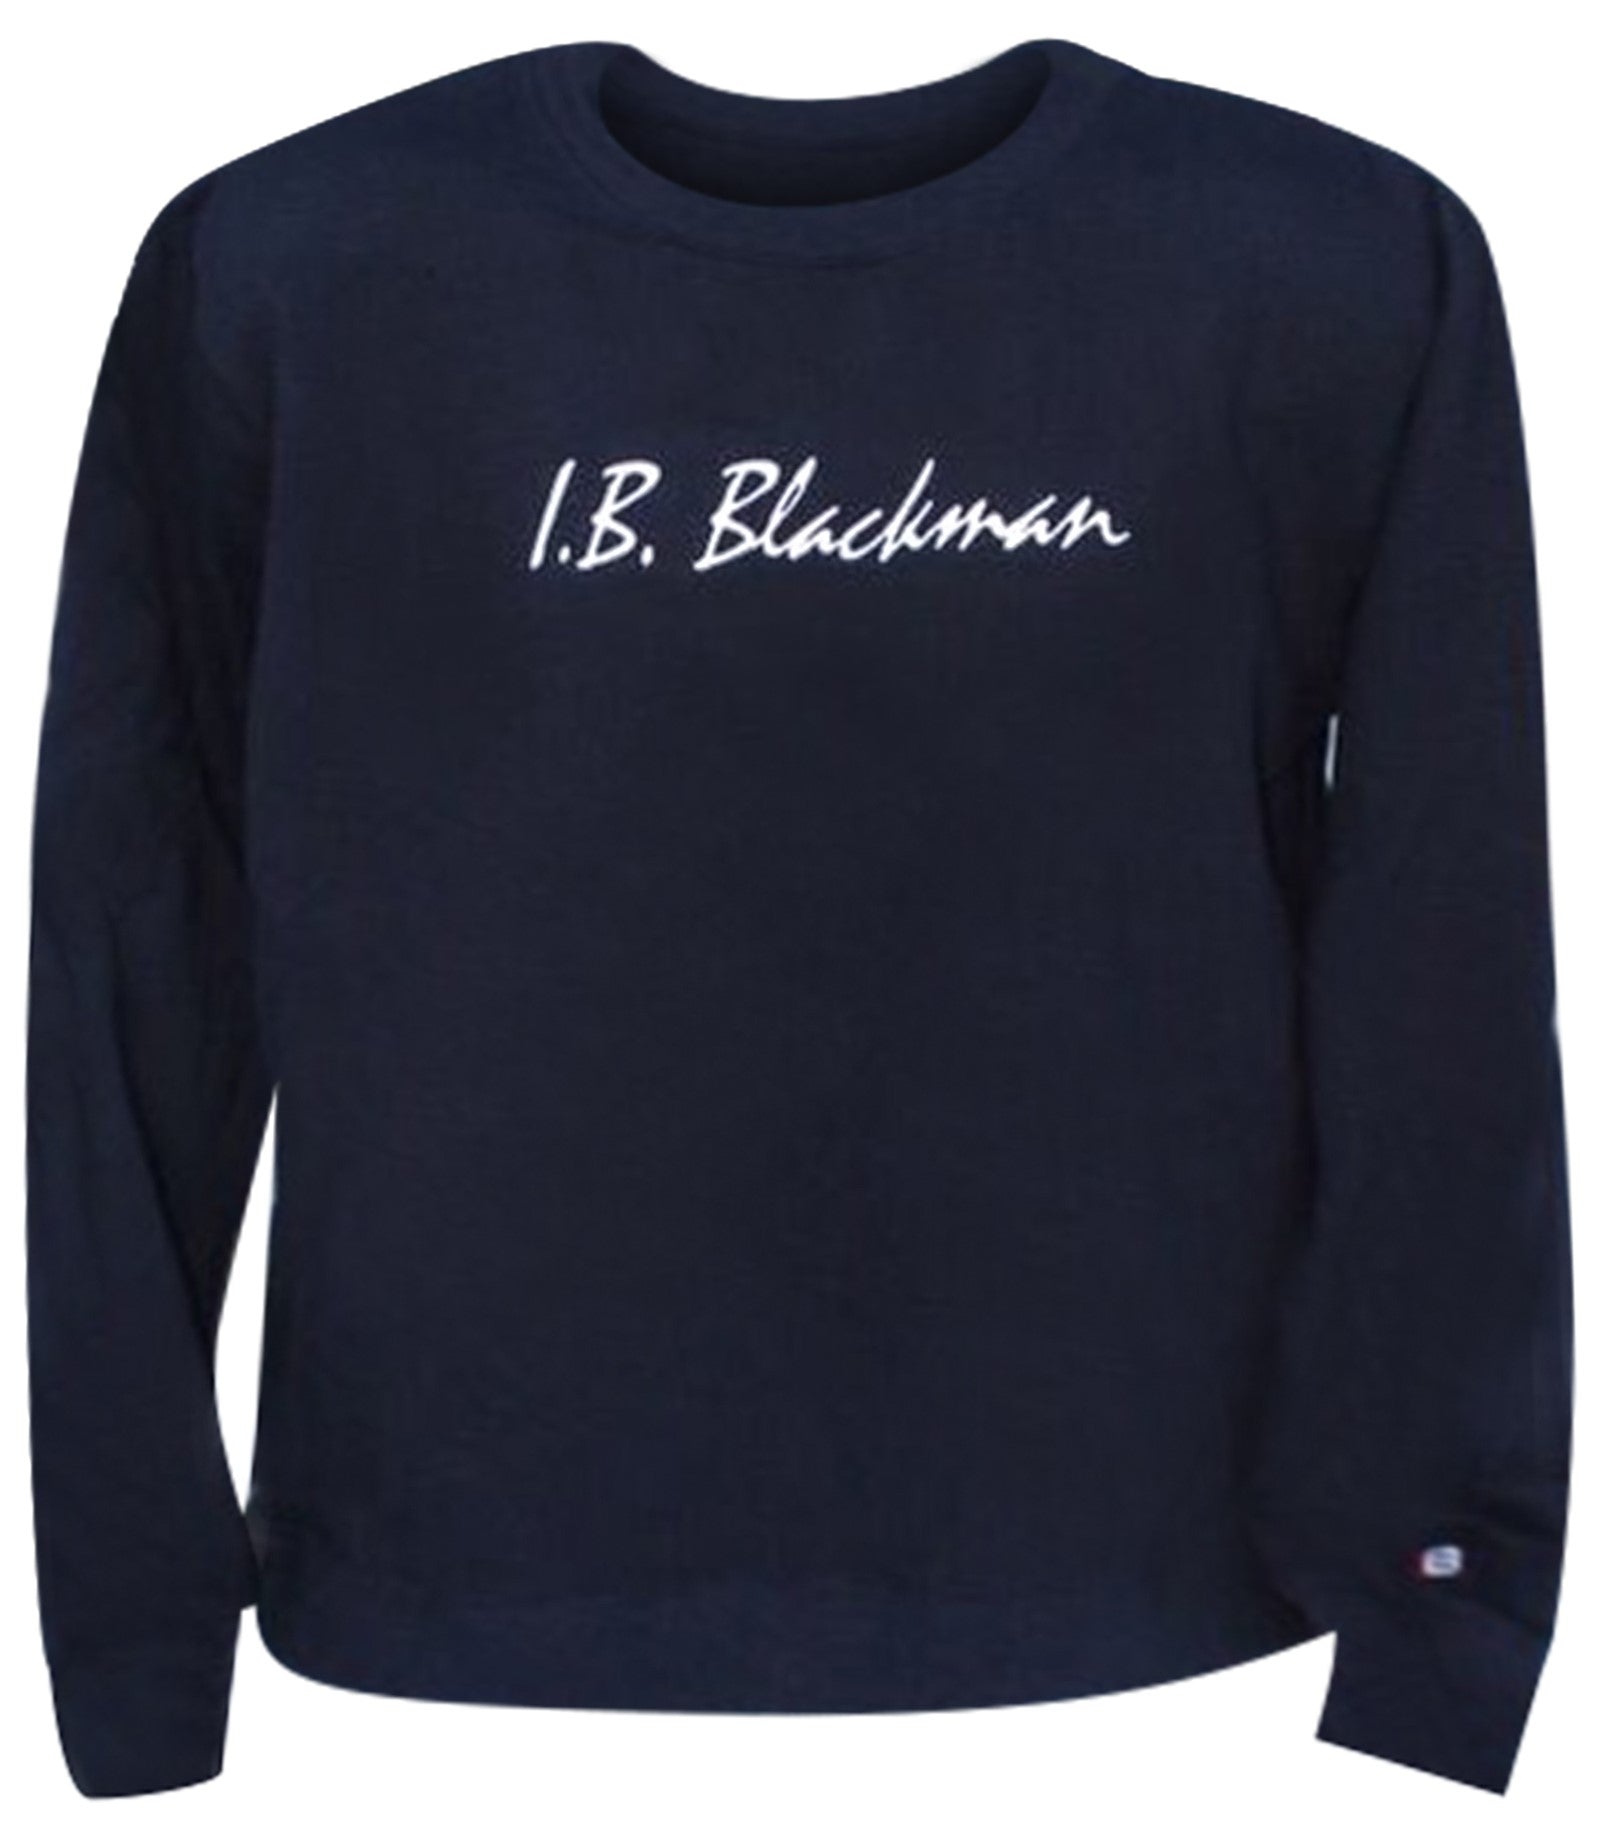 – Classic I.B. Blackman Sweatshirt